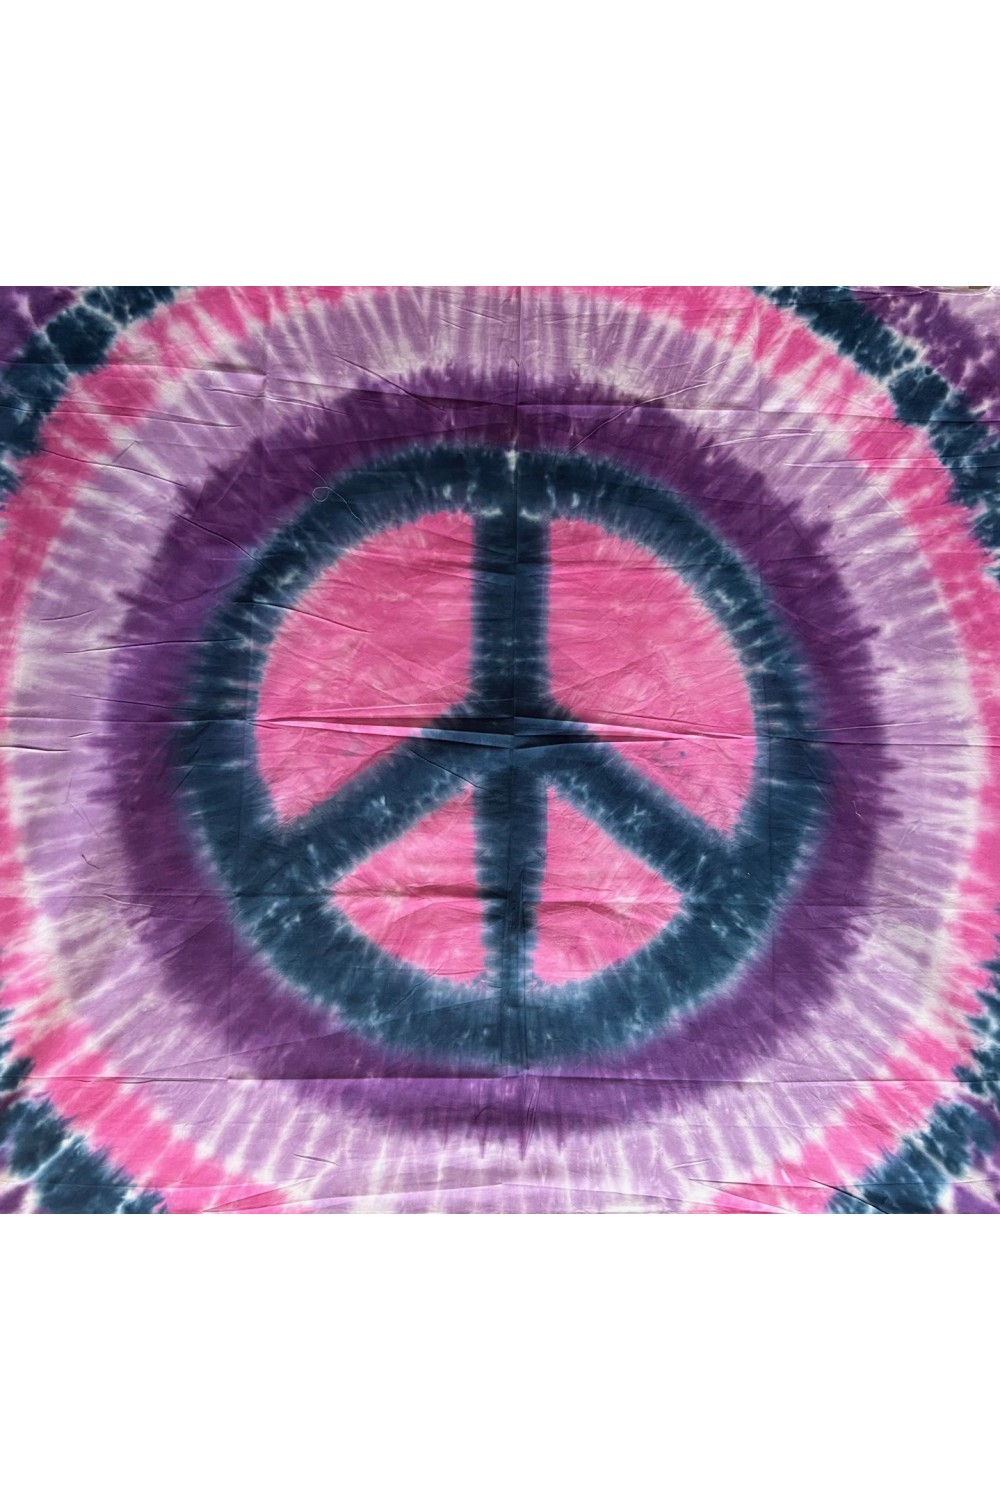 Purple & Pink Peace Sign Tie-Dye Tapestry 58x58